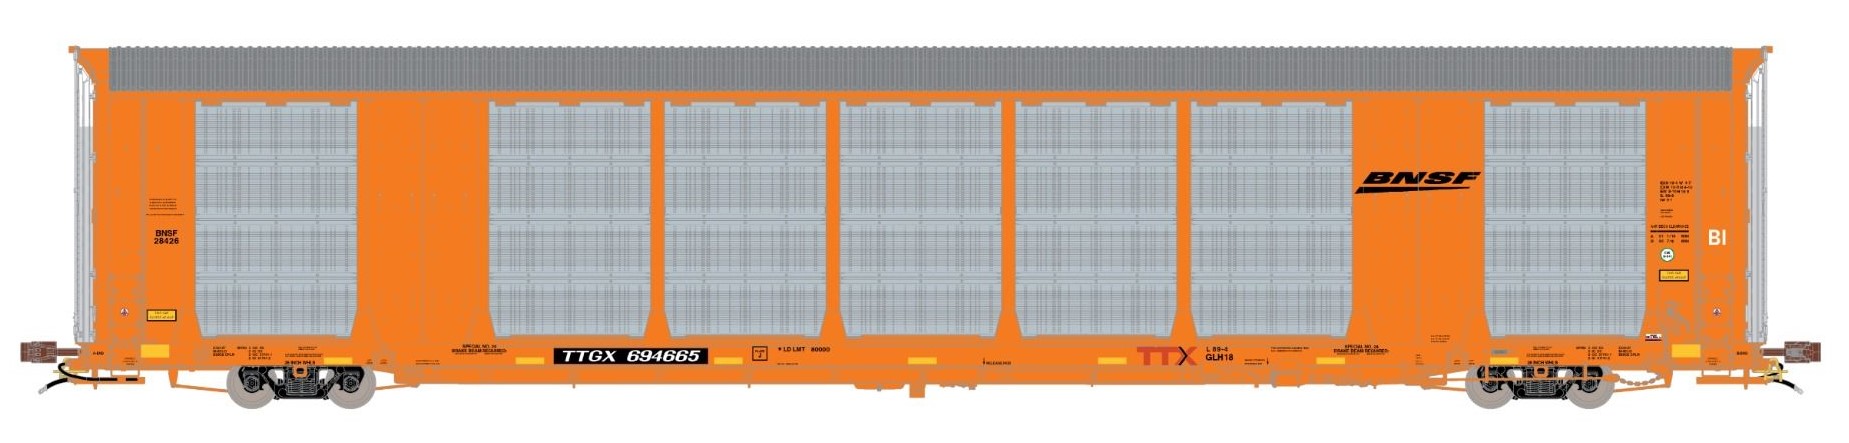 ScaleTrains Rivet Counter HO SXT38864 Gunderson Multi-Max Autorack BNSF Orange Black Logo TTGX #694670